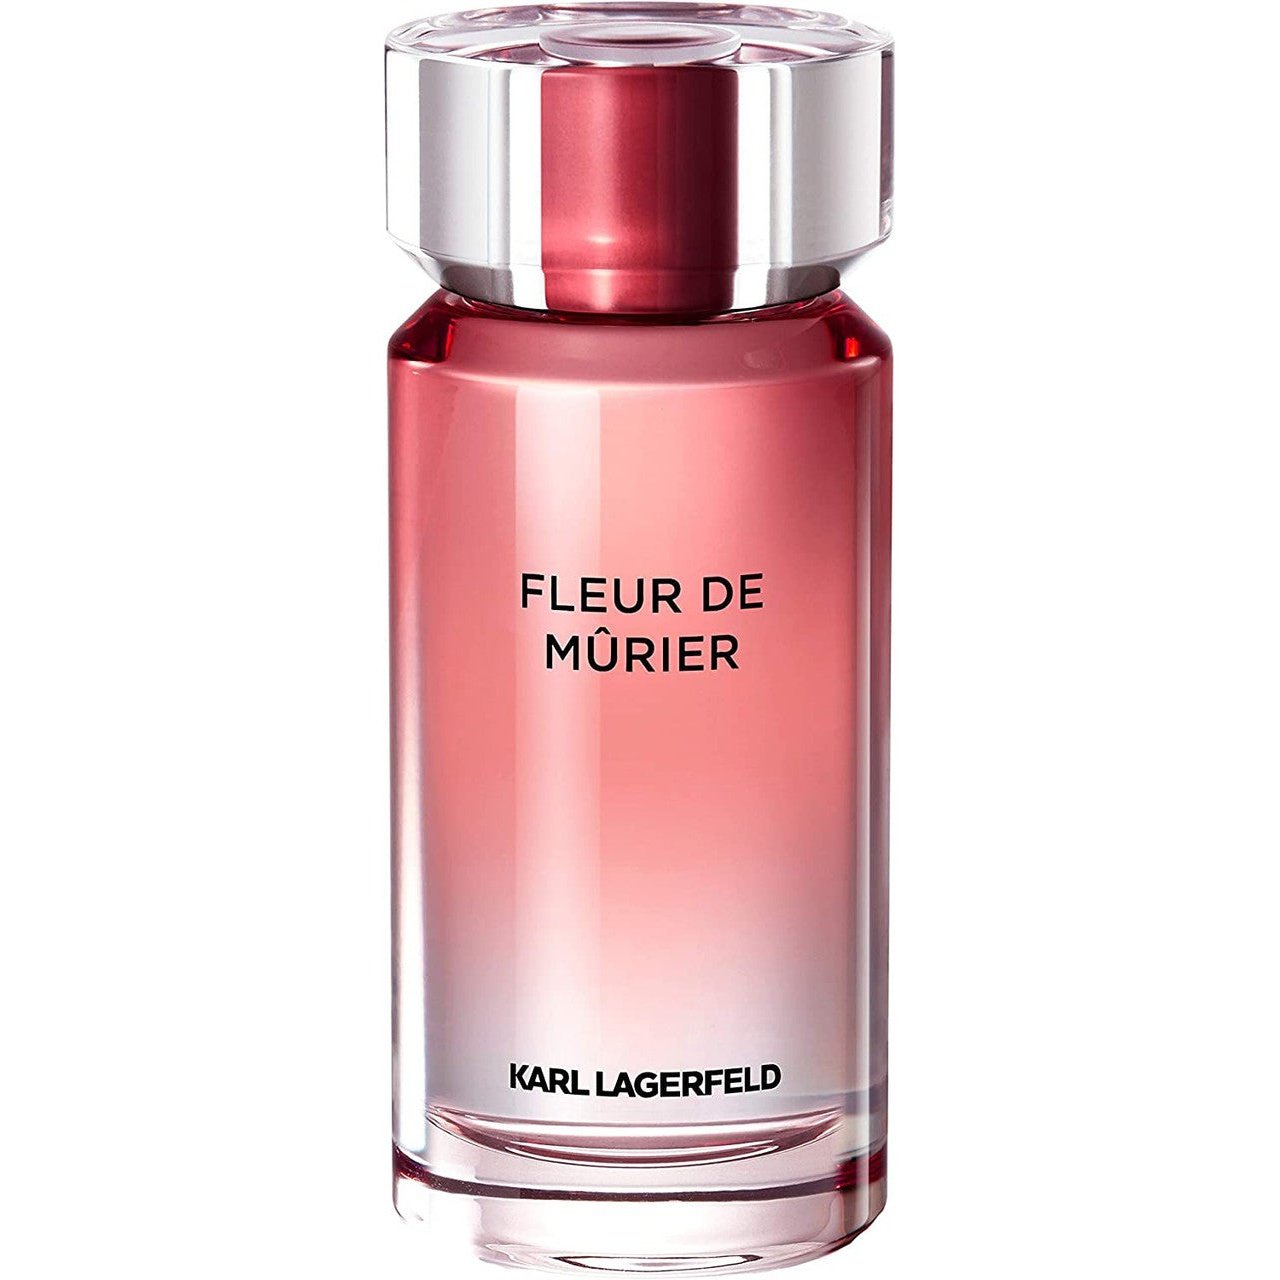 Karl Lagerfeld Fleur de Murier Eau de Parfum Spray - 100ml